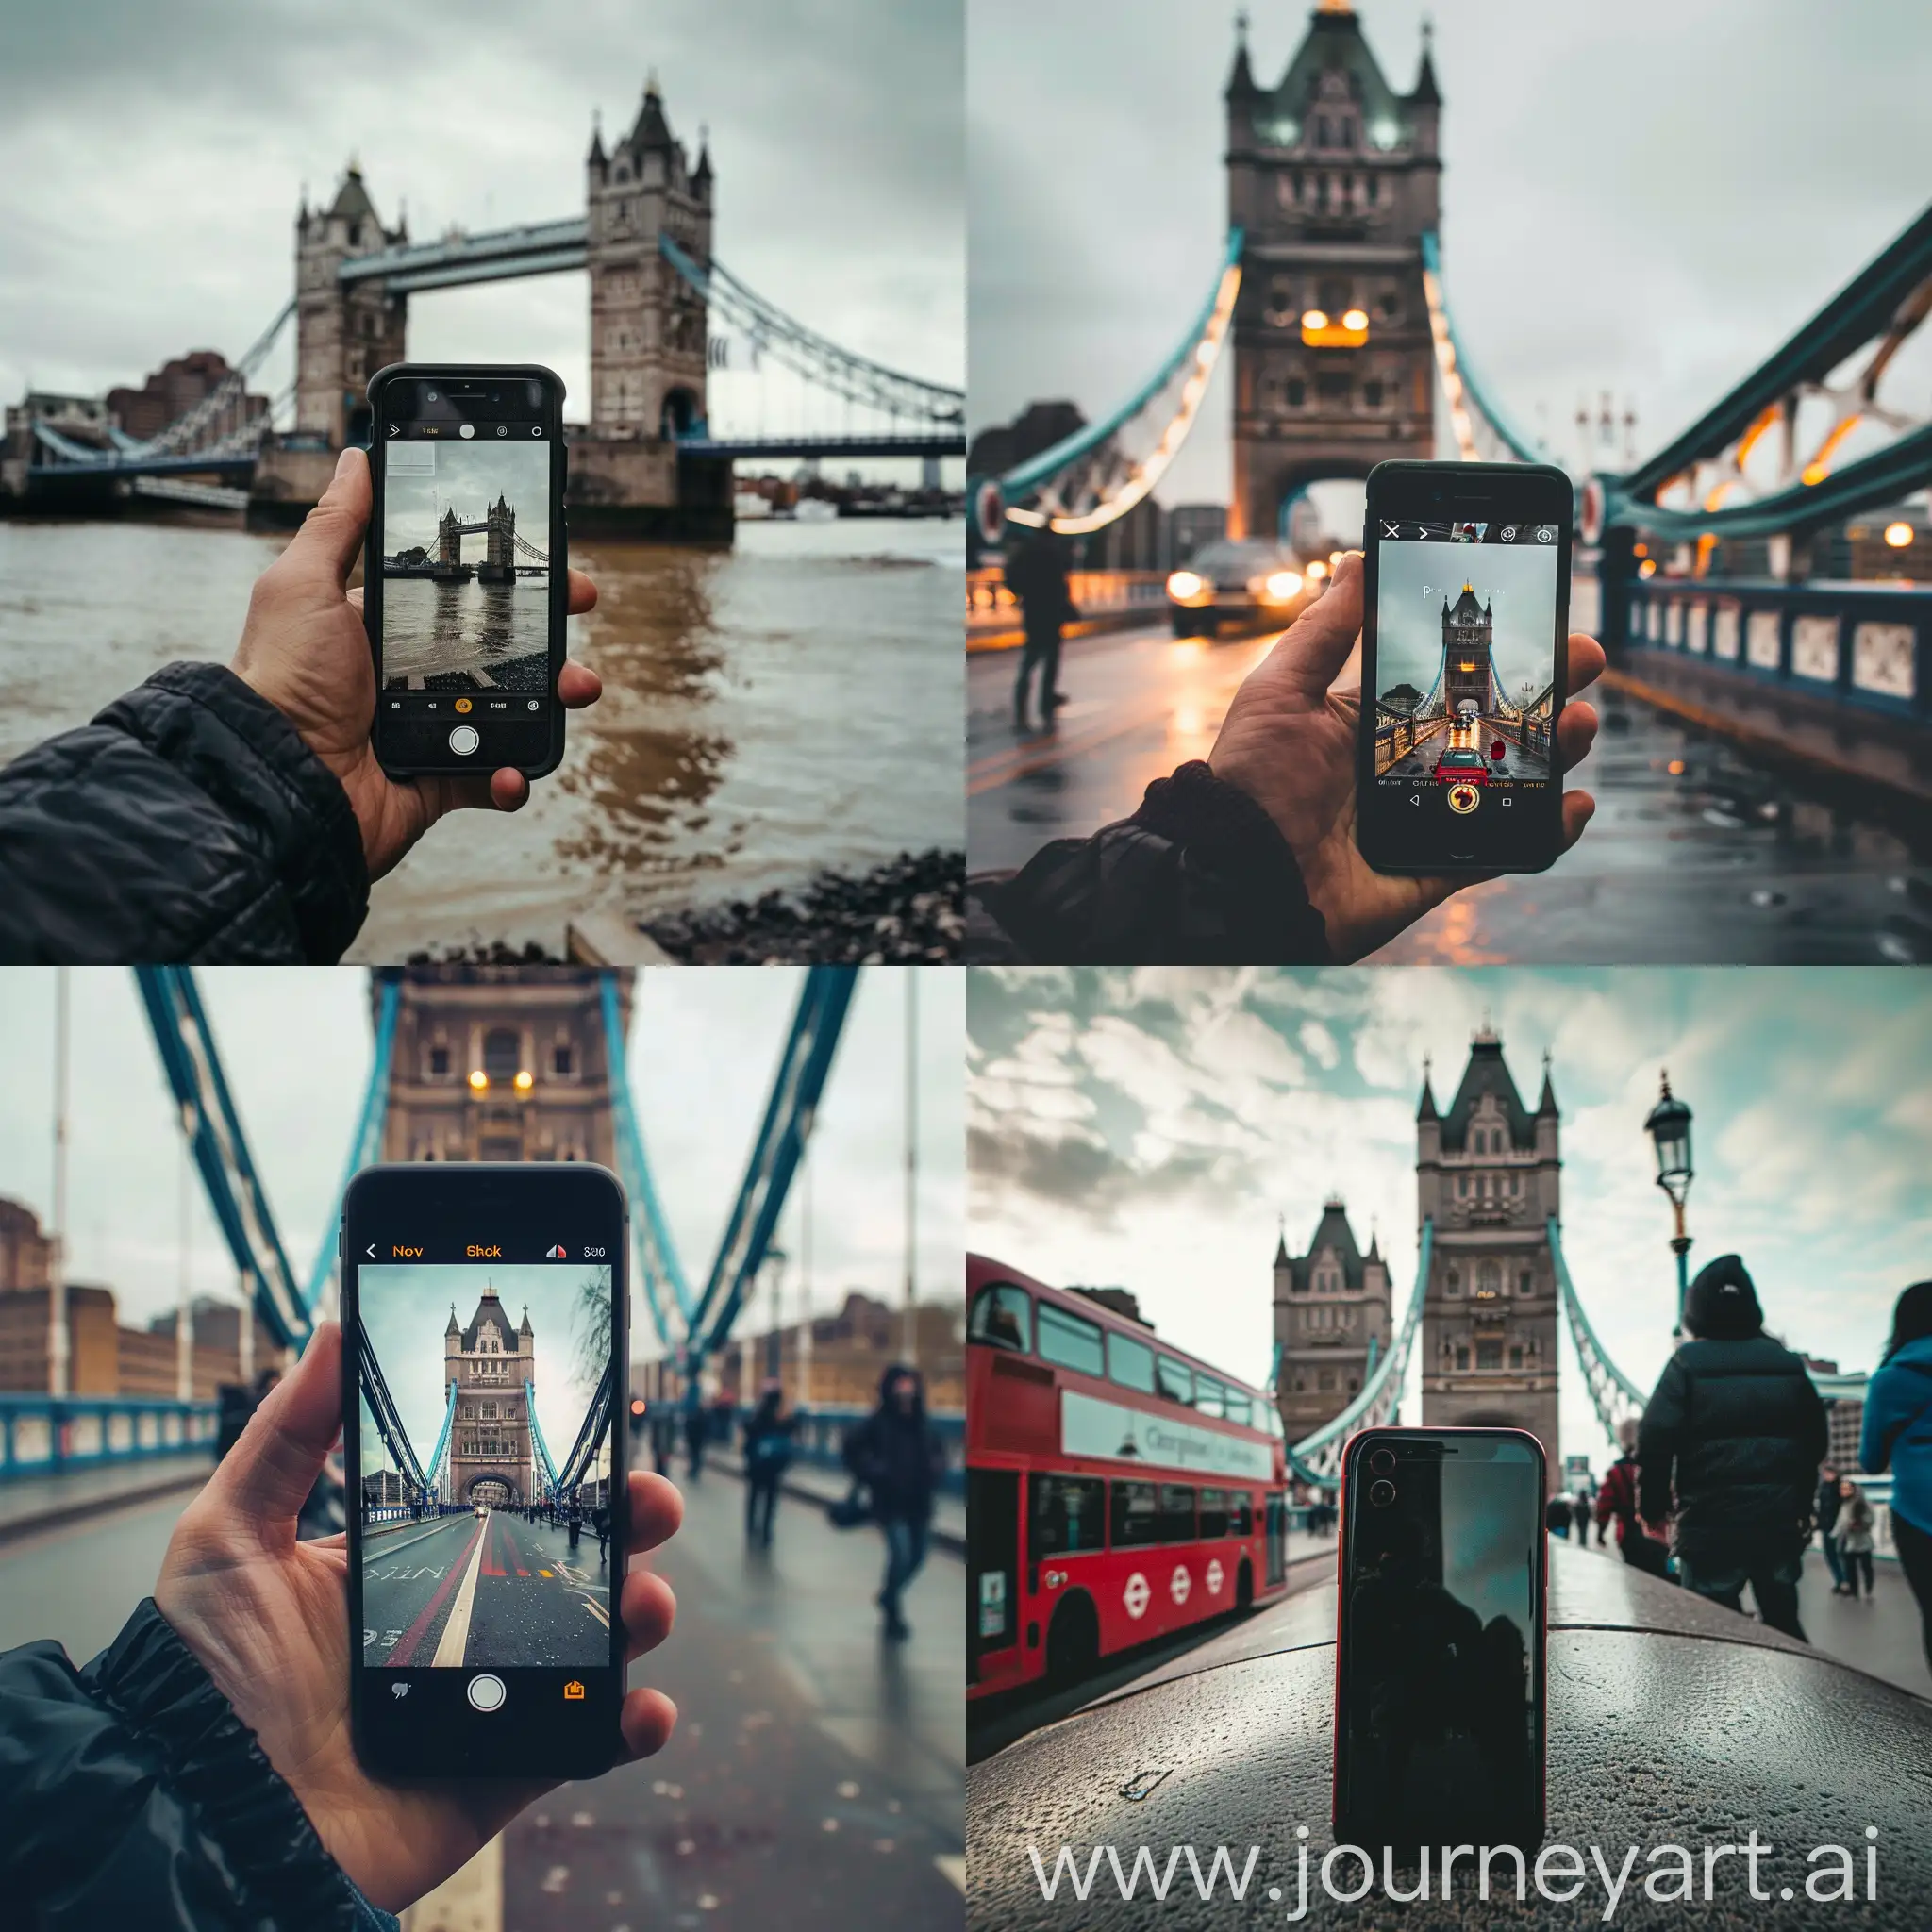 London bridge phone photo